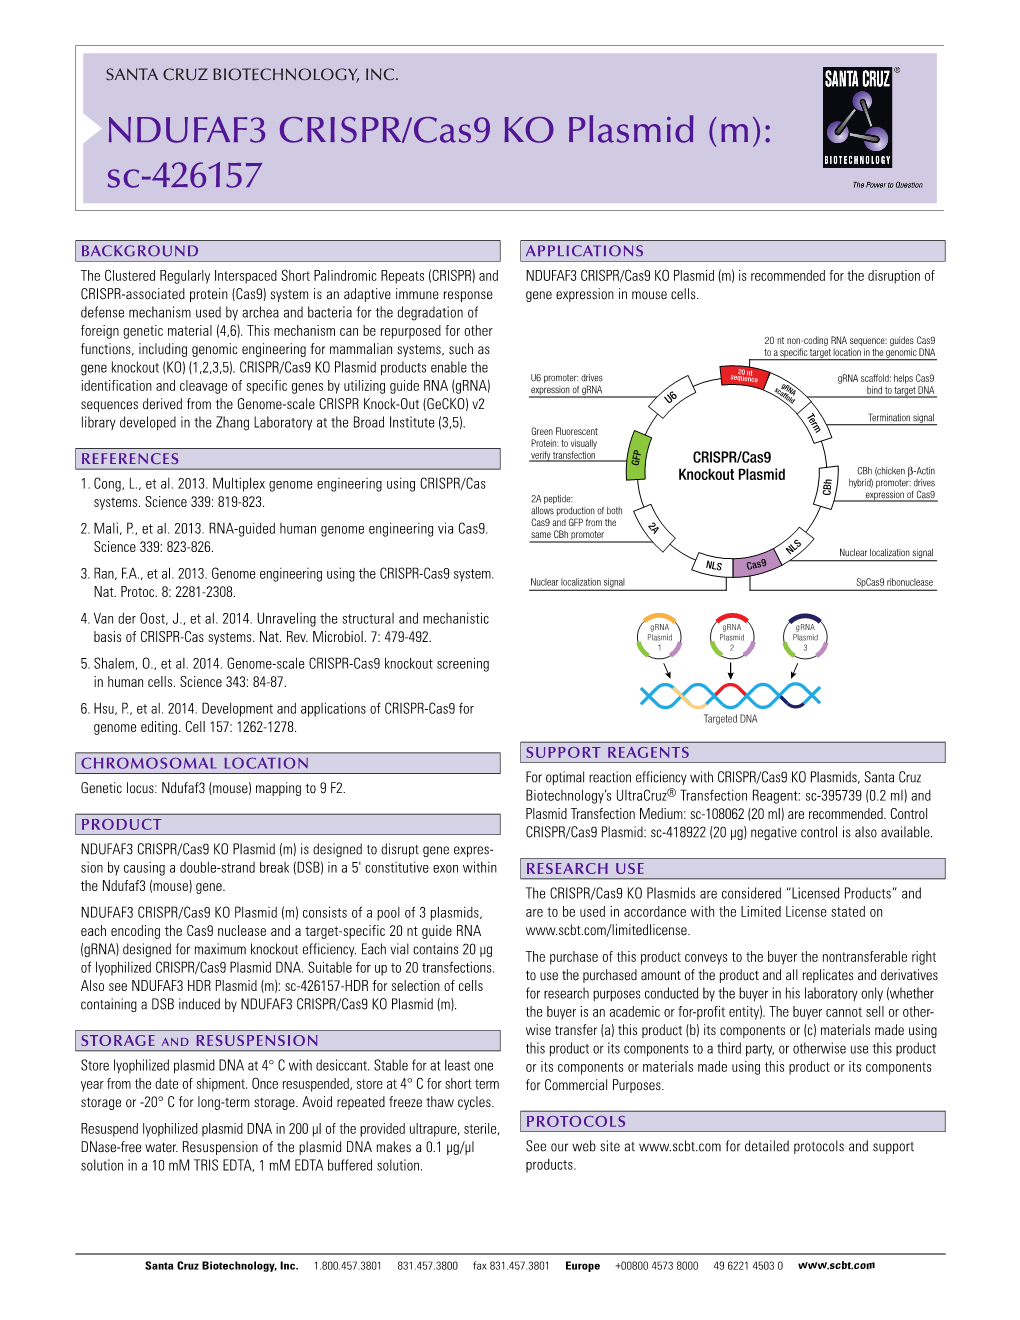 NDUFAF3 CRISPR/Cas9 KO Plasmid (M): Sc-426157